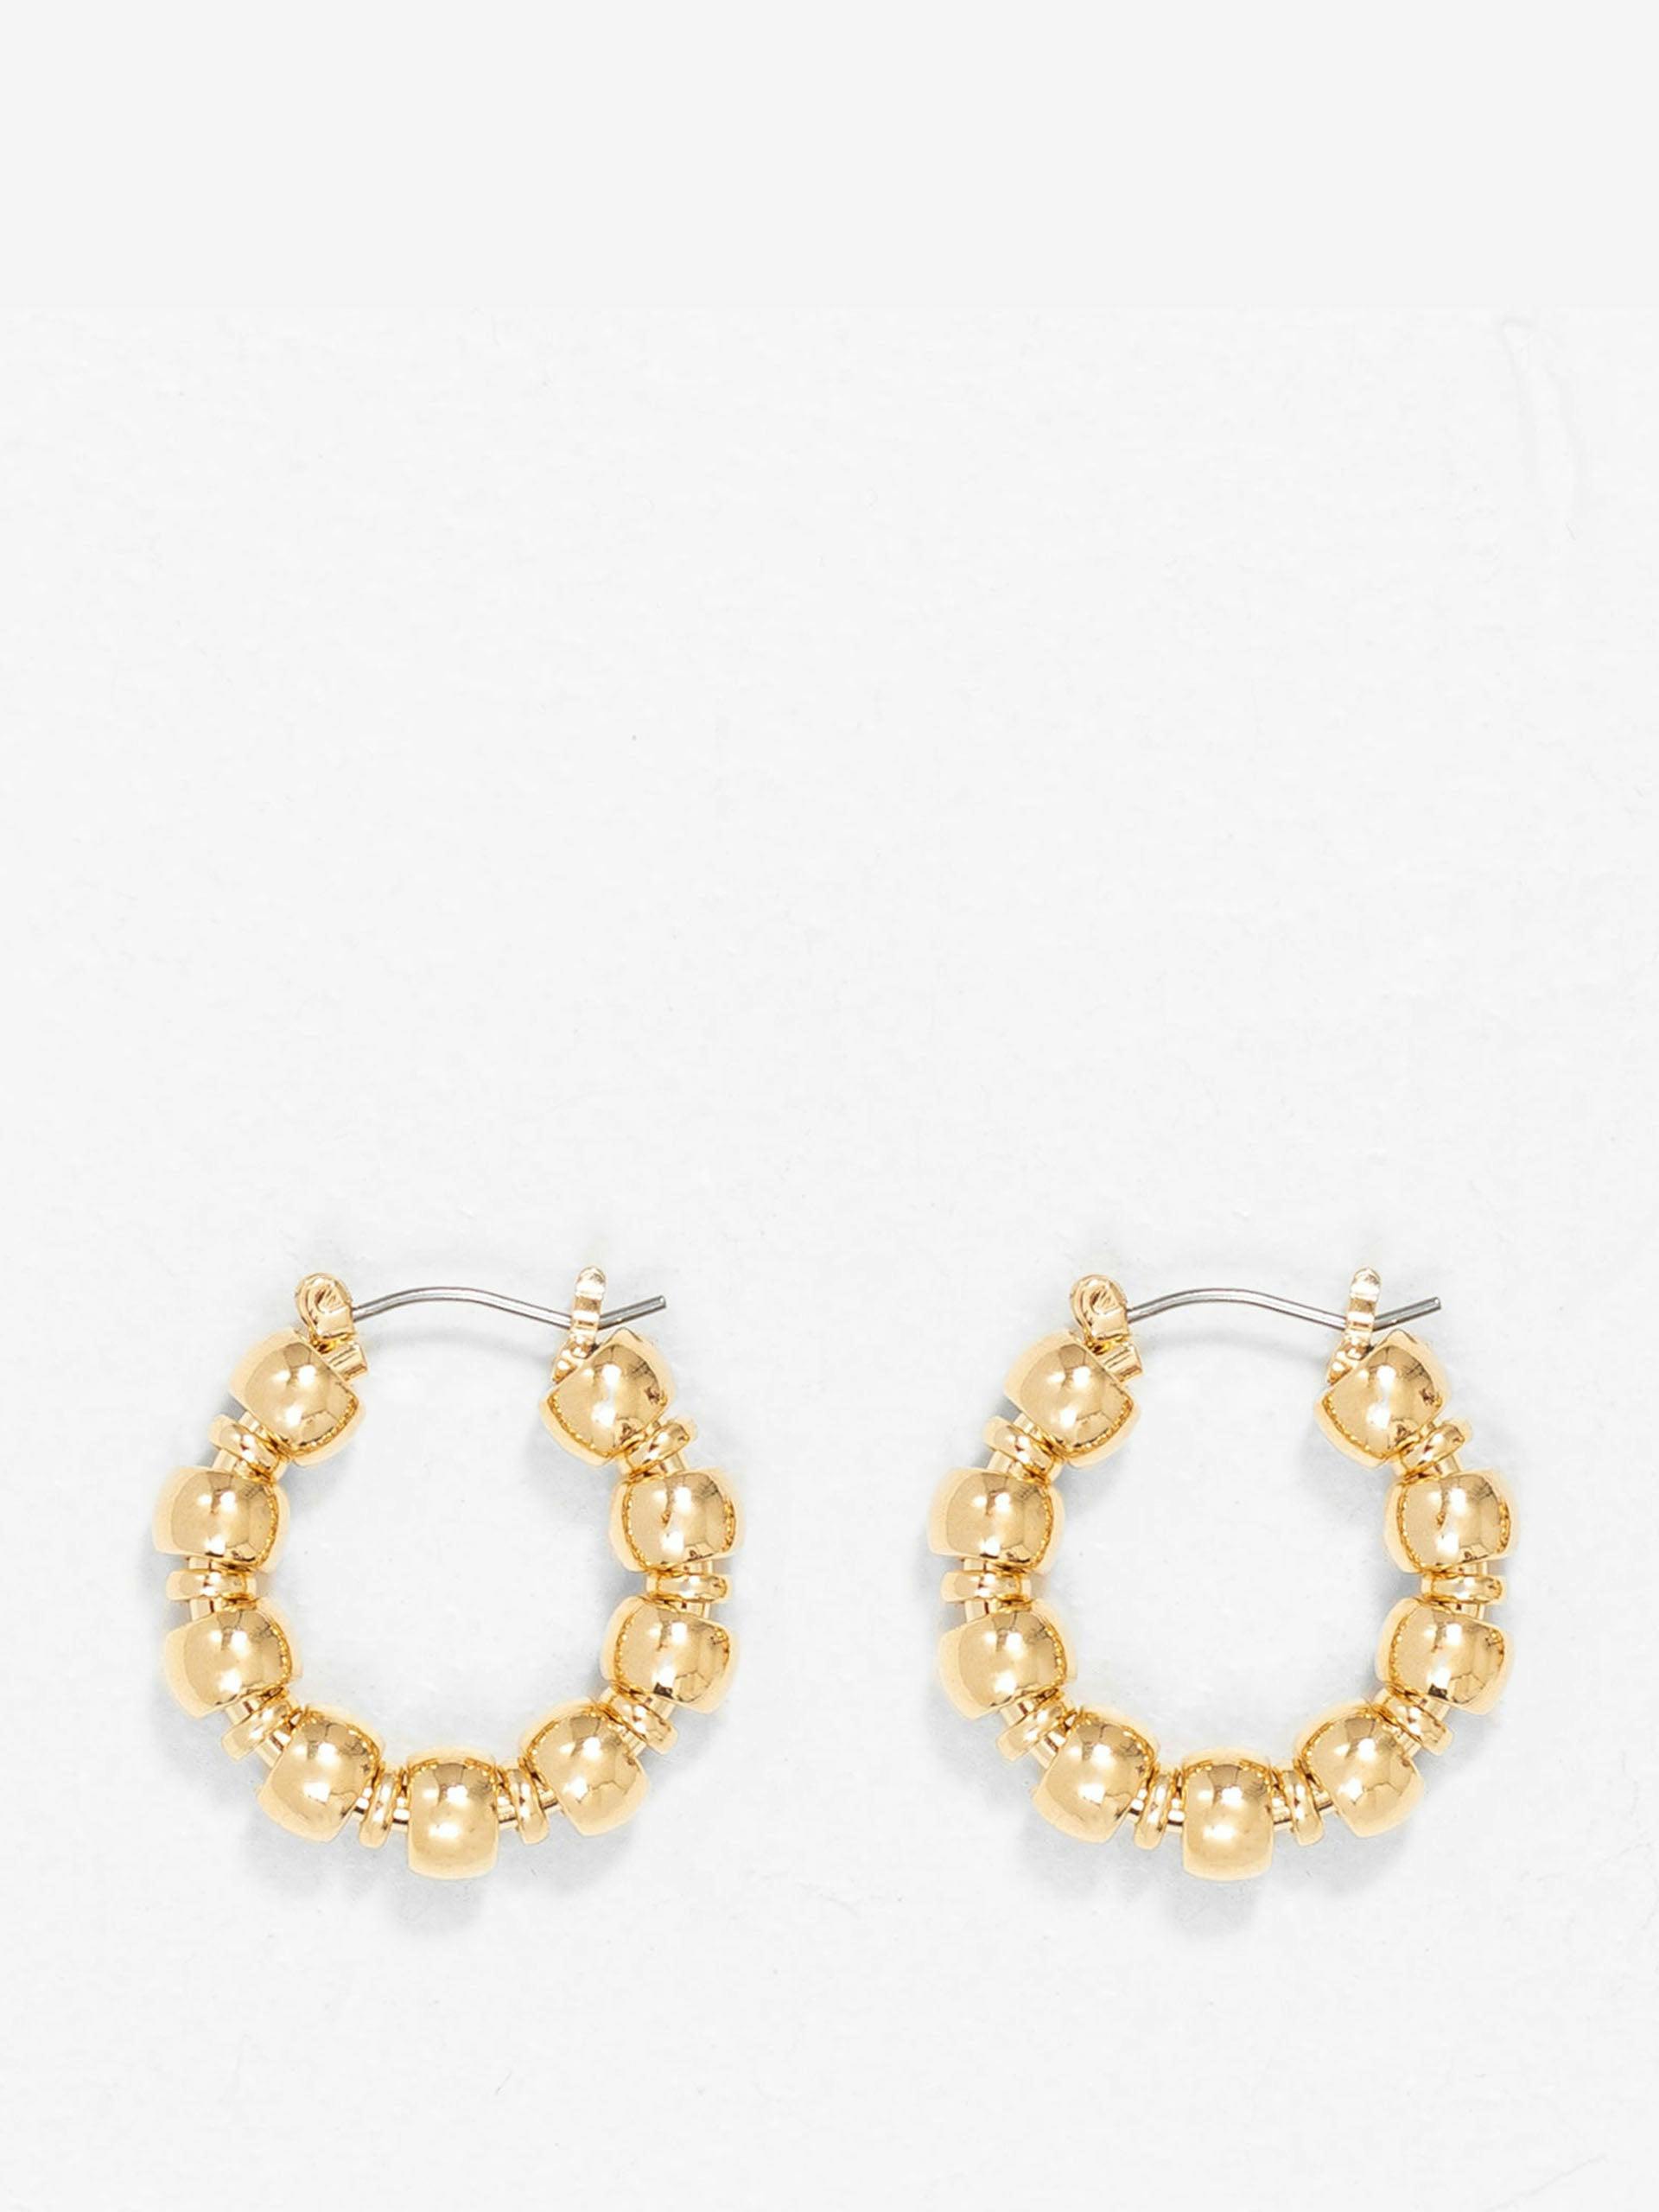 Maremma 14k gold plated earrings